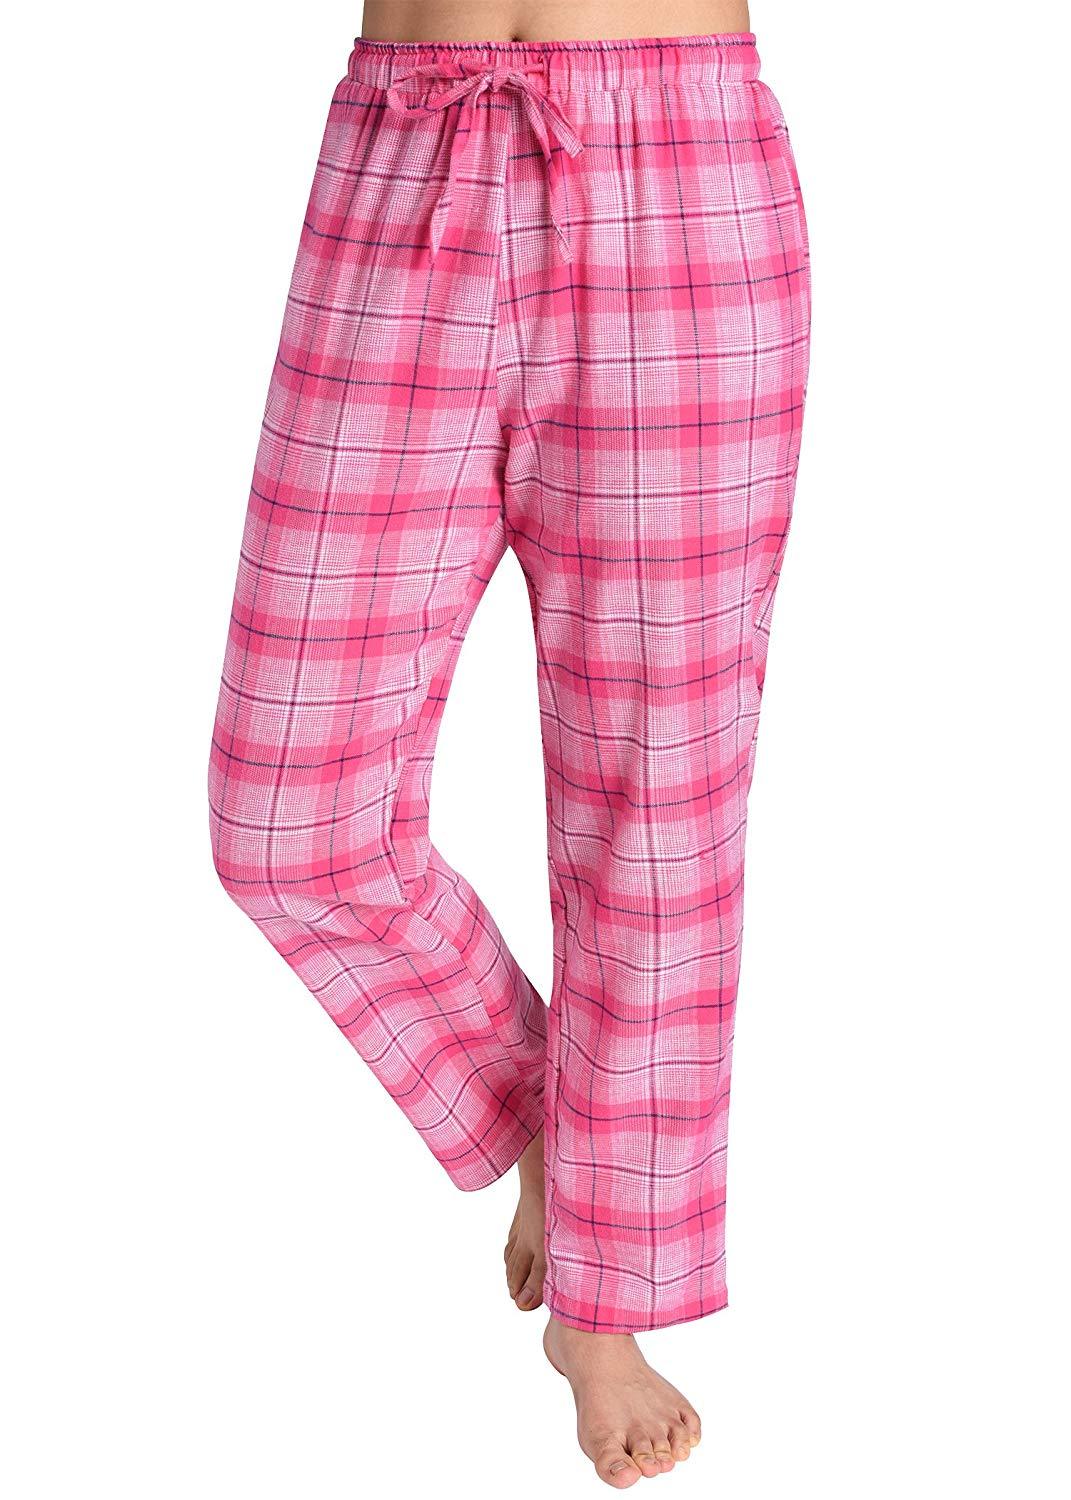 Just Love Women's Plaid Pajama Pants in 100% Cotton Jersey - Comfortable  Sleepwear for Women (Pink - Plaid, Medium) 